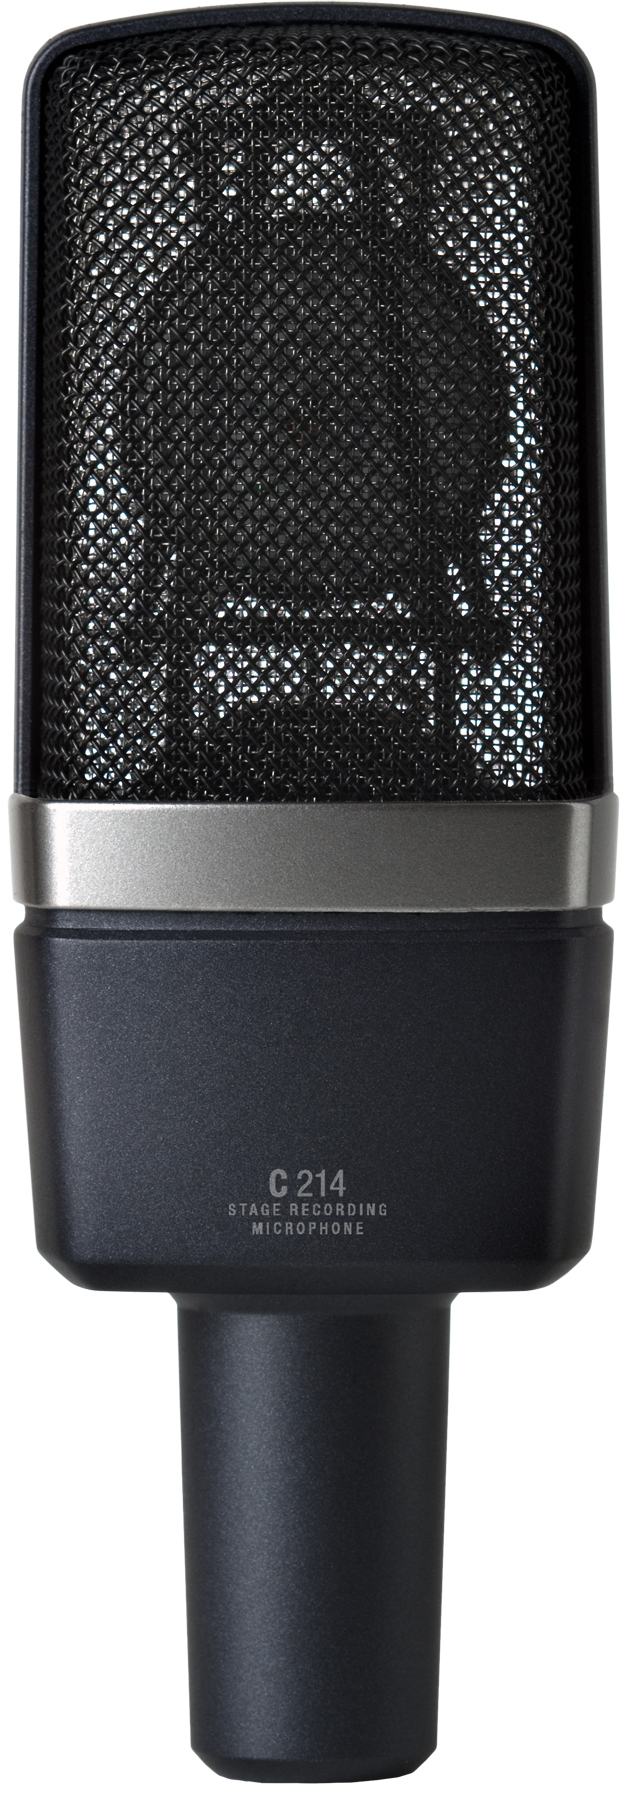 C 214 Stereoset Großmembranmikrofon Stereoset